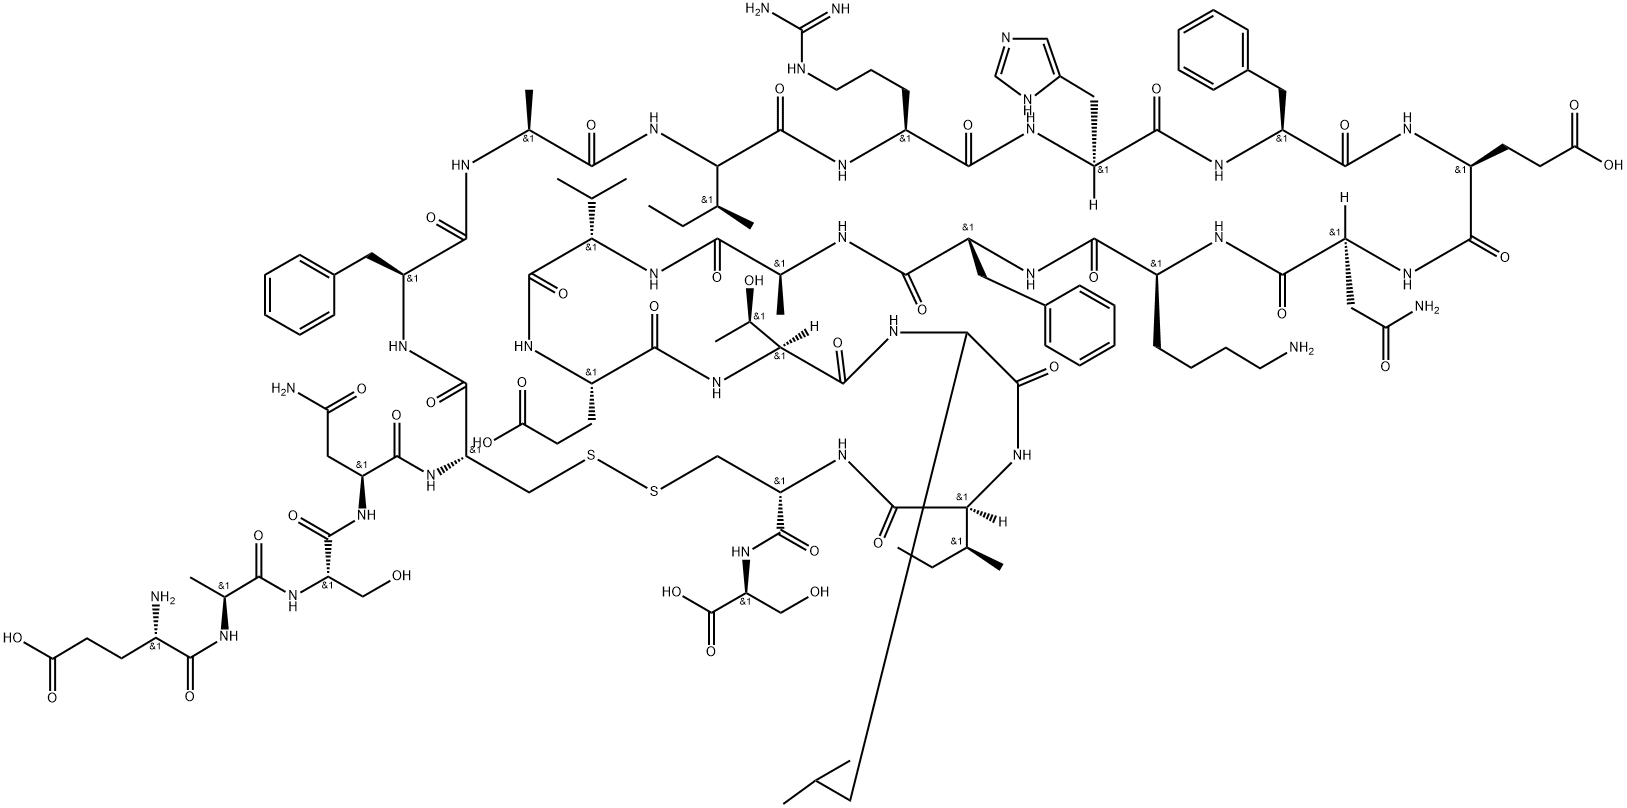 Amyloid Bri Protein (1-23) trifluoroacetate salt H-Glu-Ala-Ser-Asn-Cys-Phe-Ala-Ile-Arg-His-Phe-Glu-Asn-Lys-Phe-Ala-Val-Glu-Thr-Leu-Ile-Cys-Ser-OH trifluoroacetate salt (Disulfide bond) Struktur